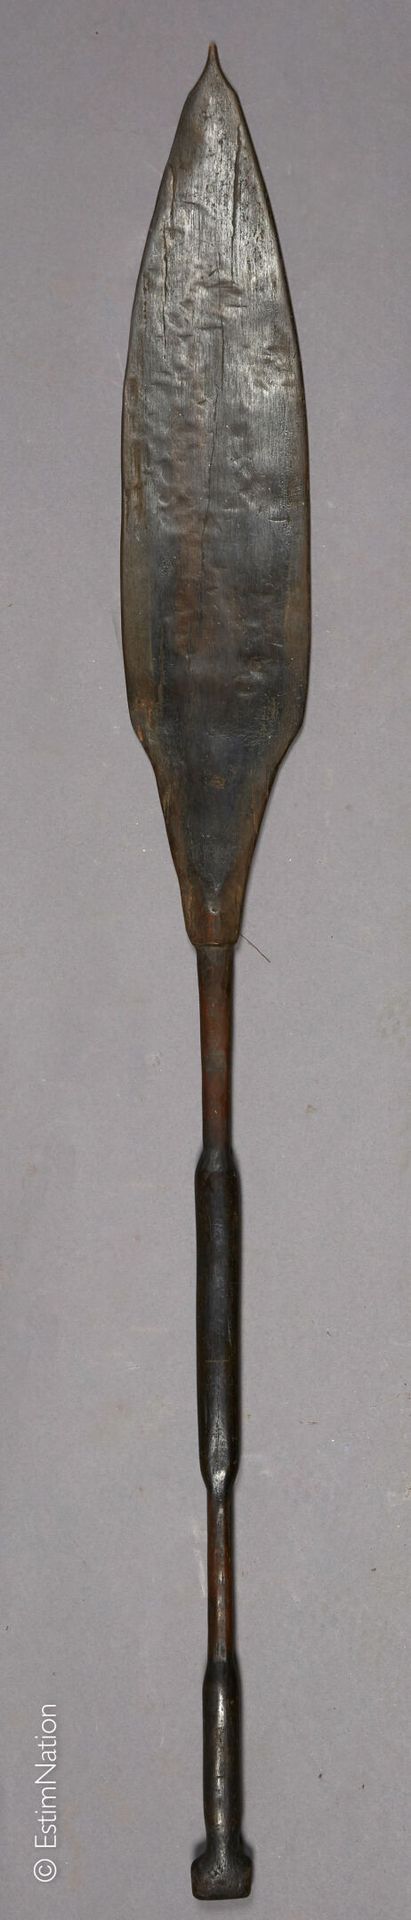 INDONÉSIE 印度尼西亚



雕花木桨，带有铜锈，手柄上装饰有两个把手。



身高：123厘米





(竞拍价格：80欧元)